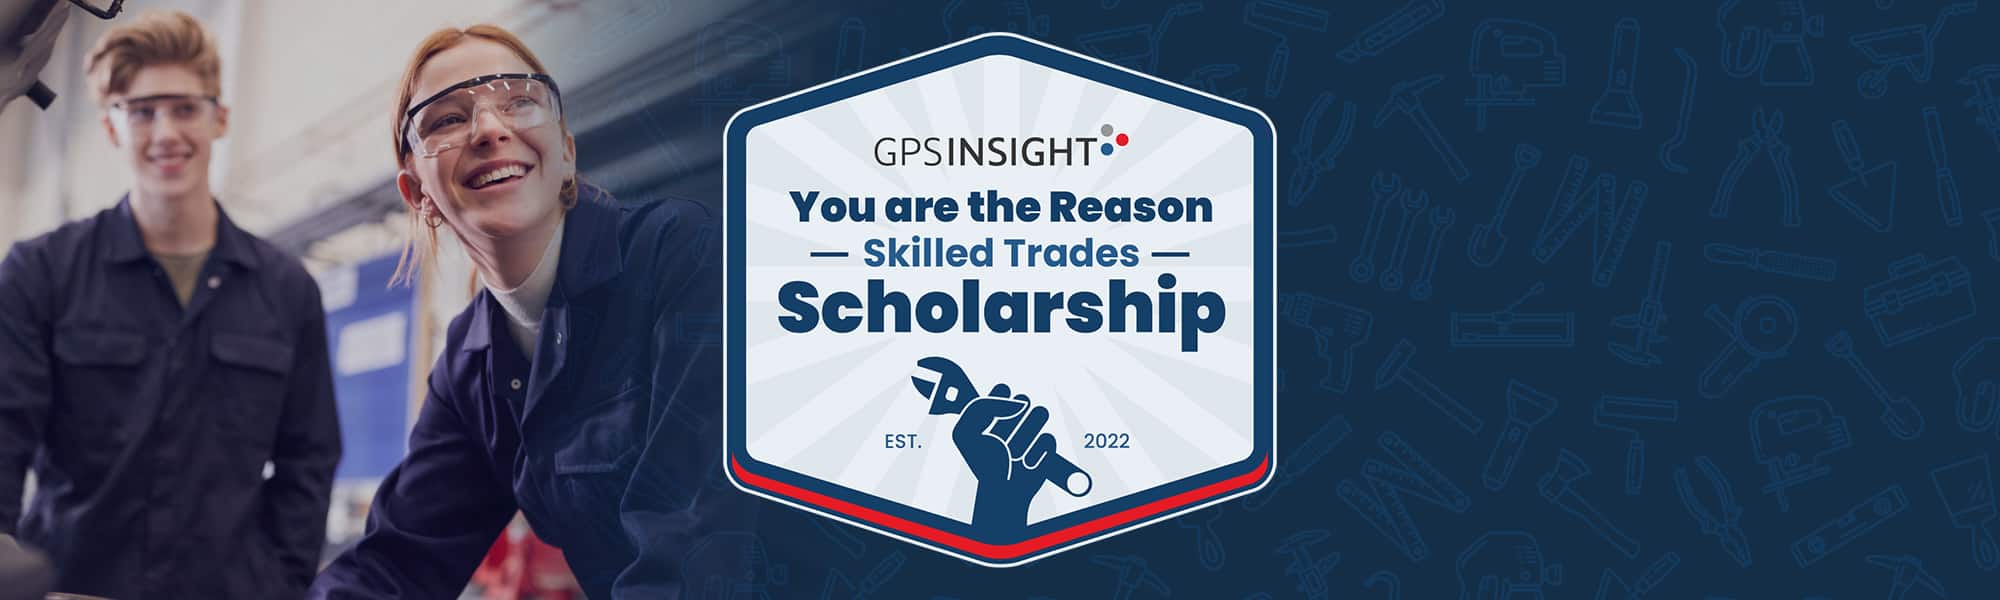 GPS Insight Scholarship Program